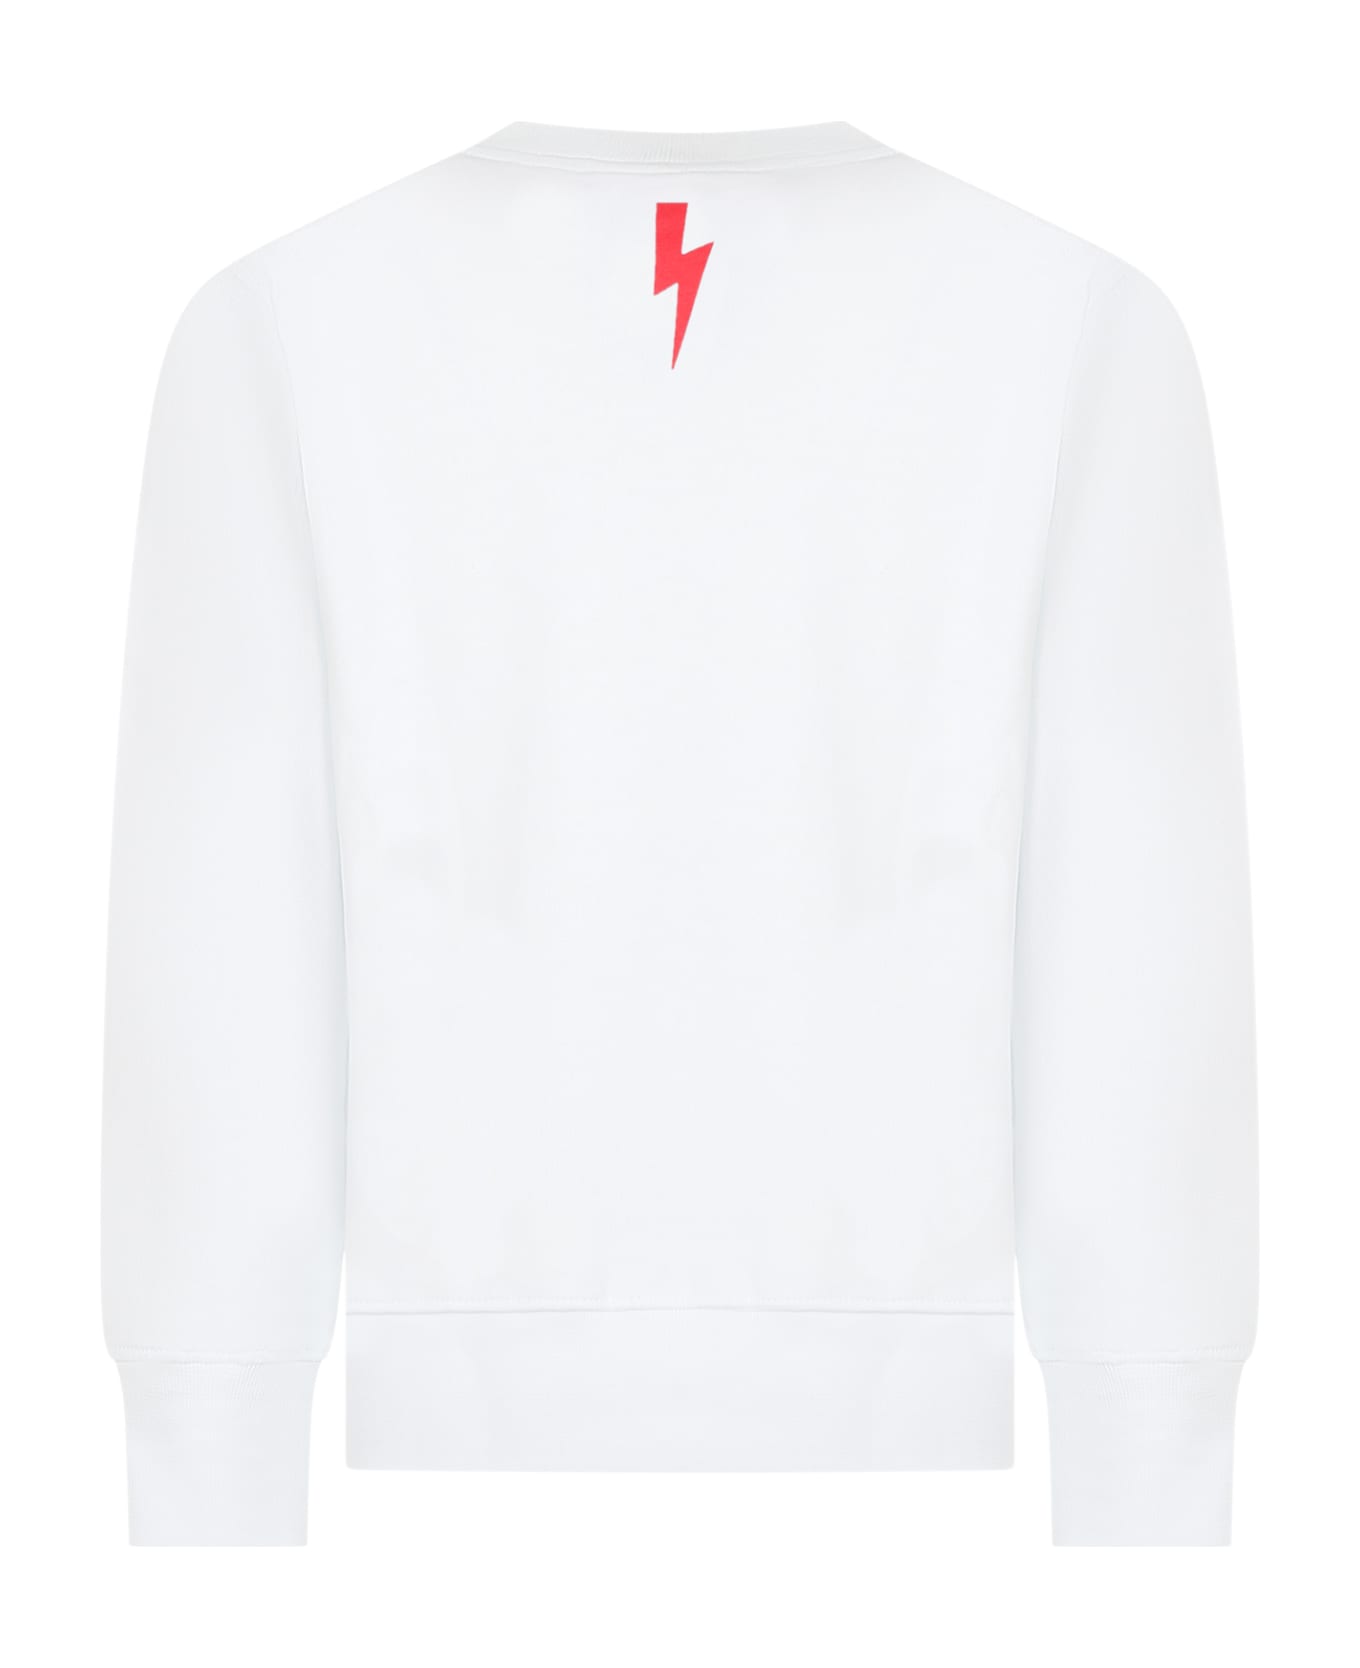 Neil Barrett White Sweatshirt For Boy With Red And White Logo - White ニットウェア＆スウェットシャツ